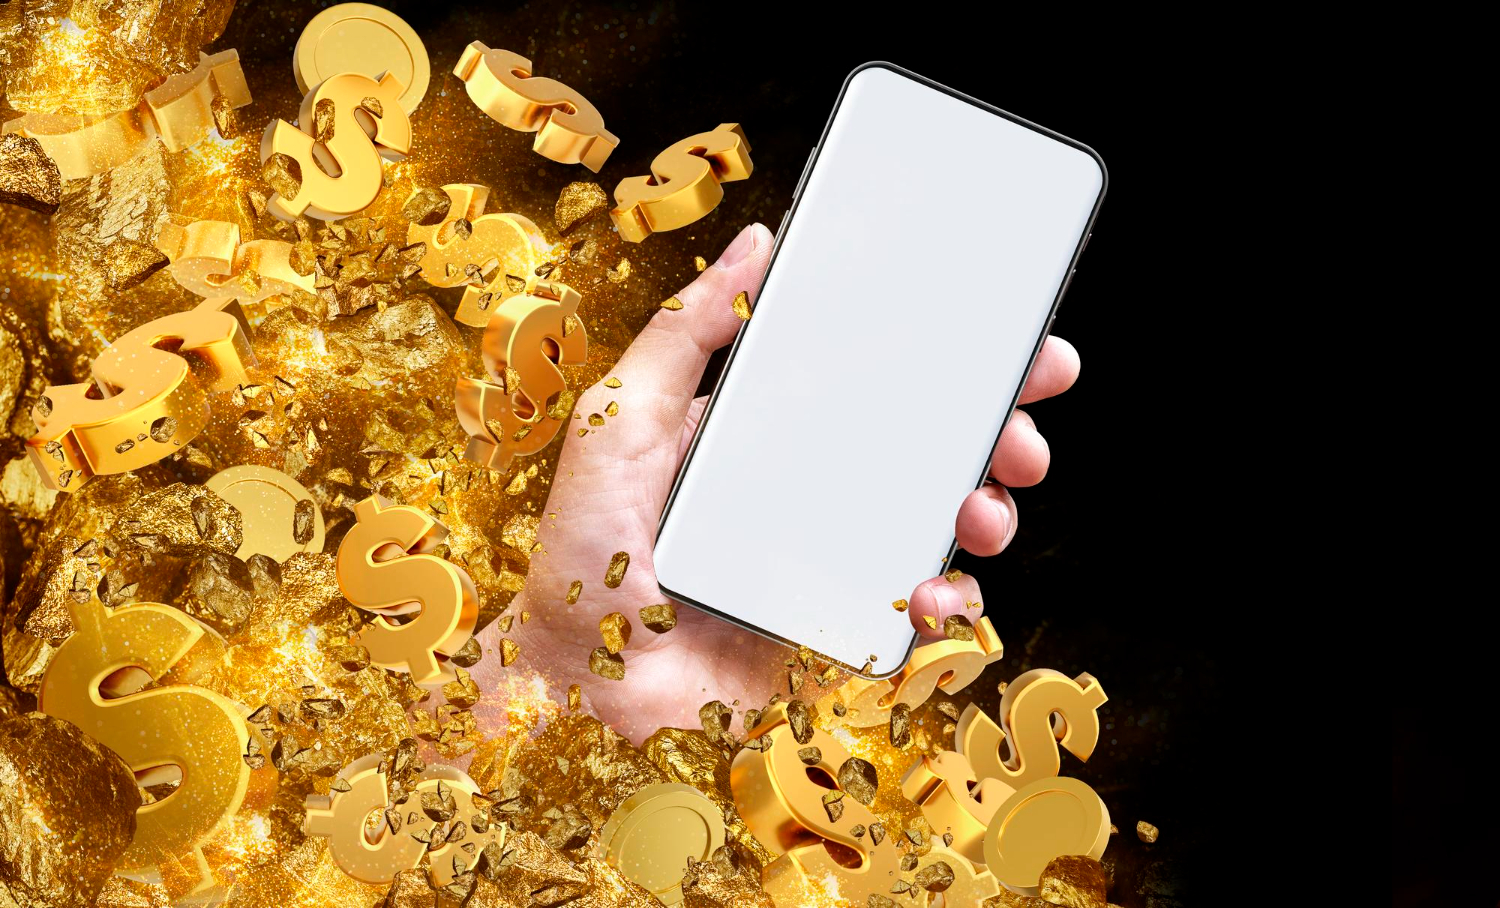 Gold Mine App Review: Legit Or Scam? 7